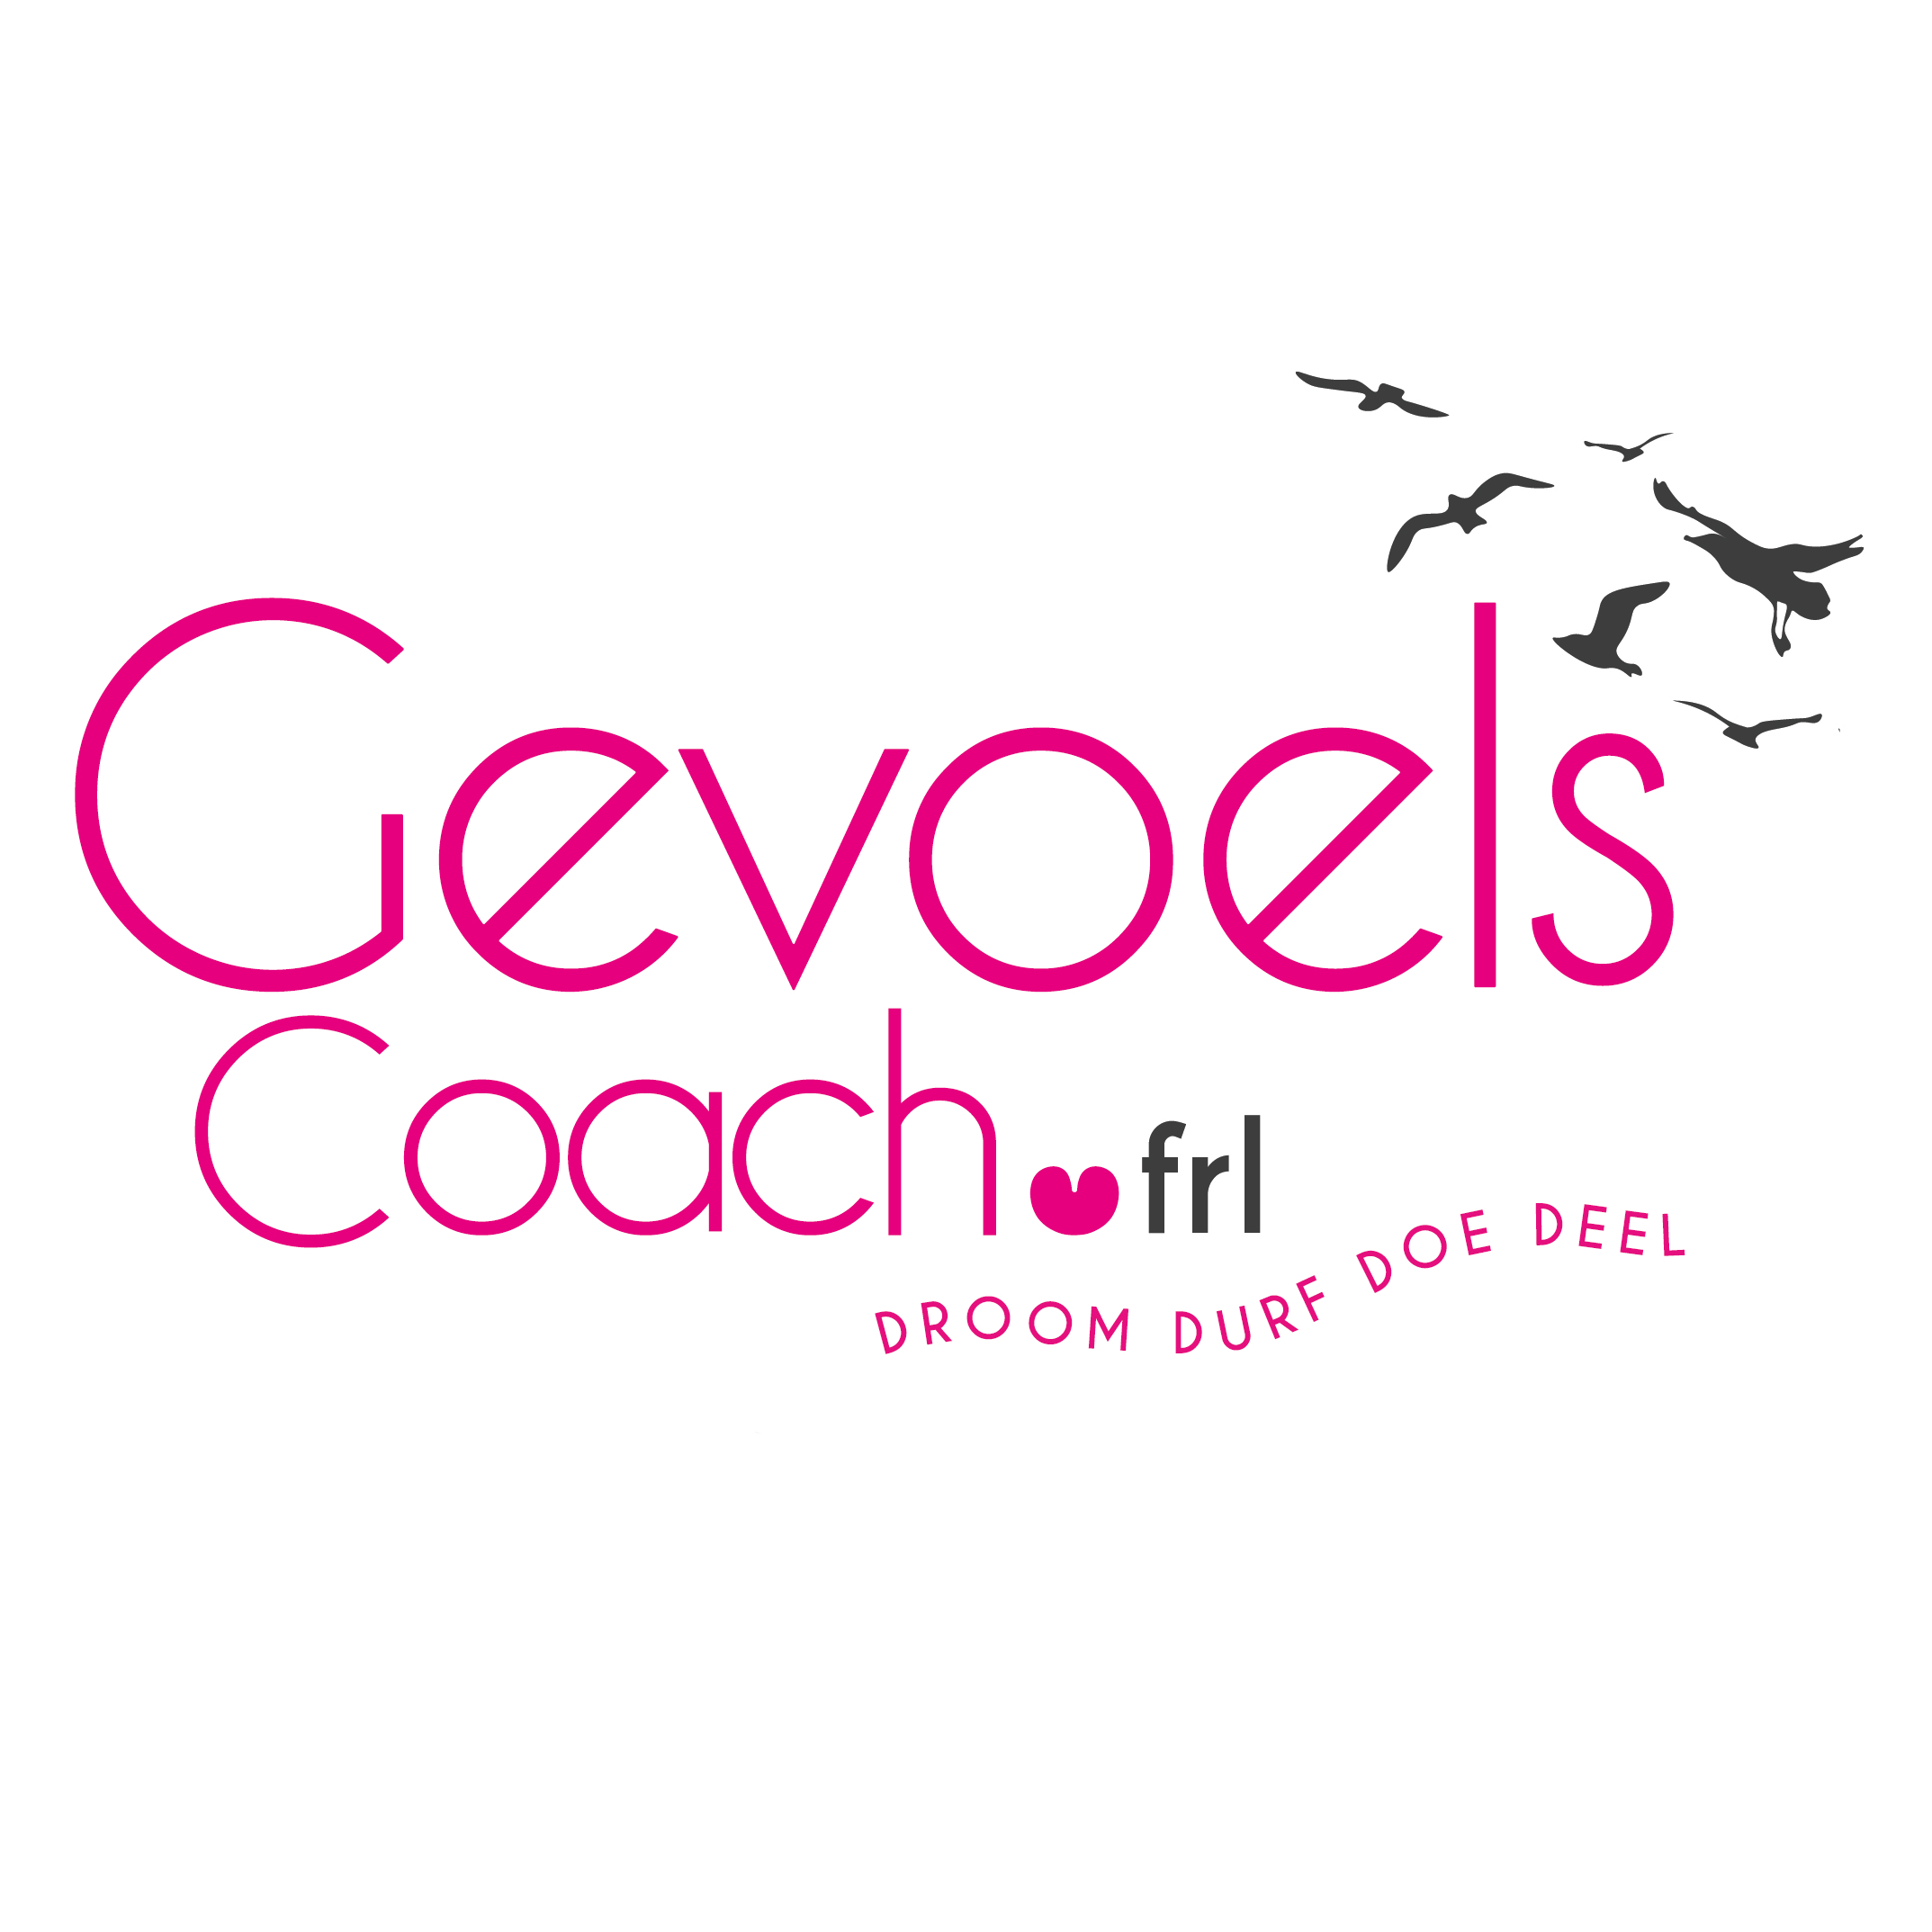 GevoelsCoach.frl logo